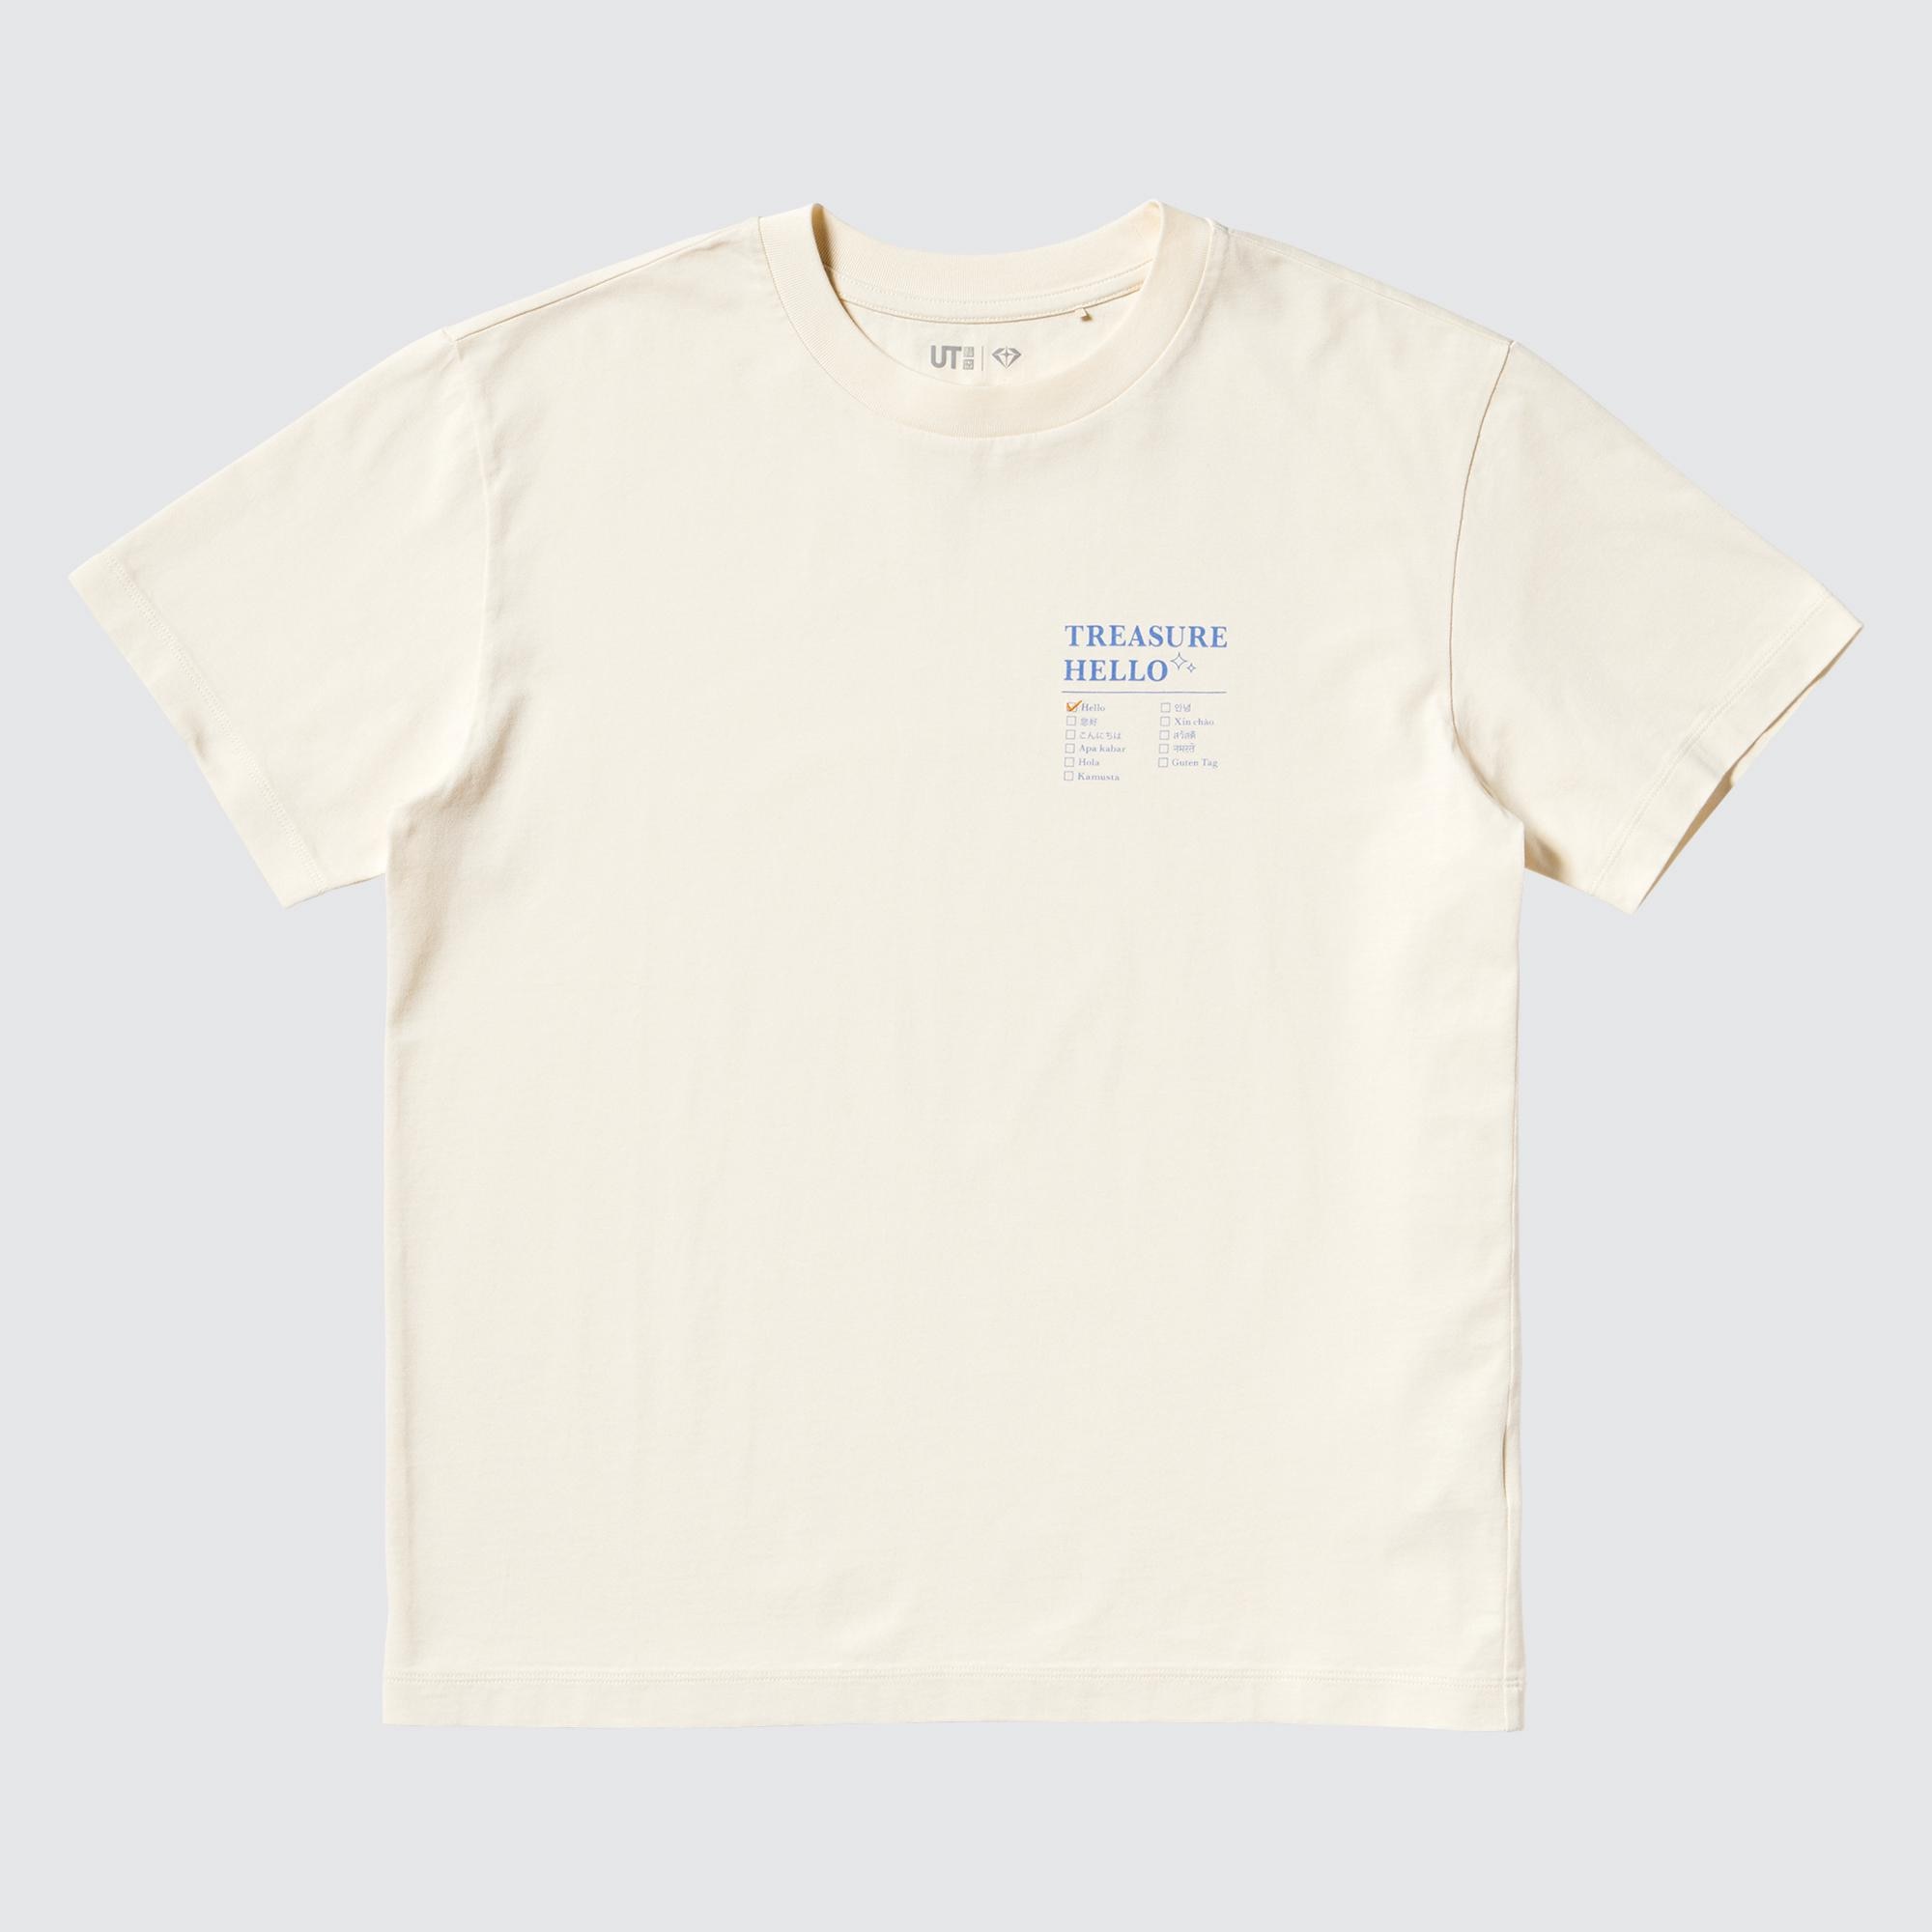 Find Your TREASURE UT (Short-Sleeve Graphic T-Shirt) (HELLO)